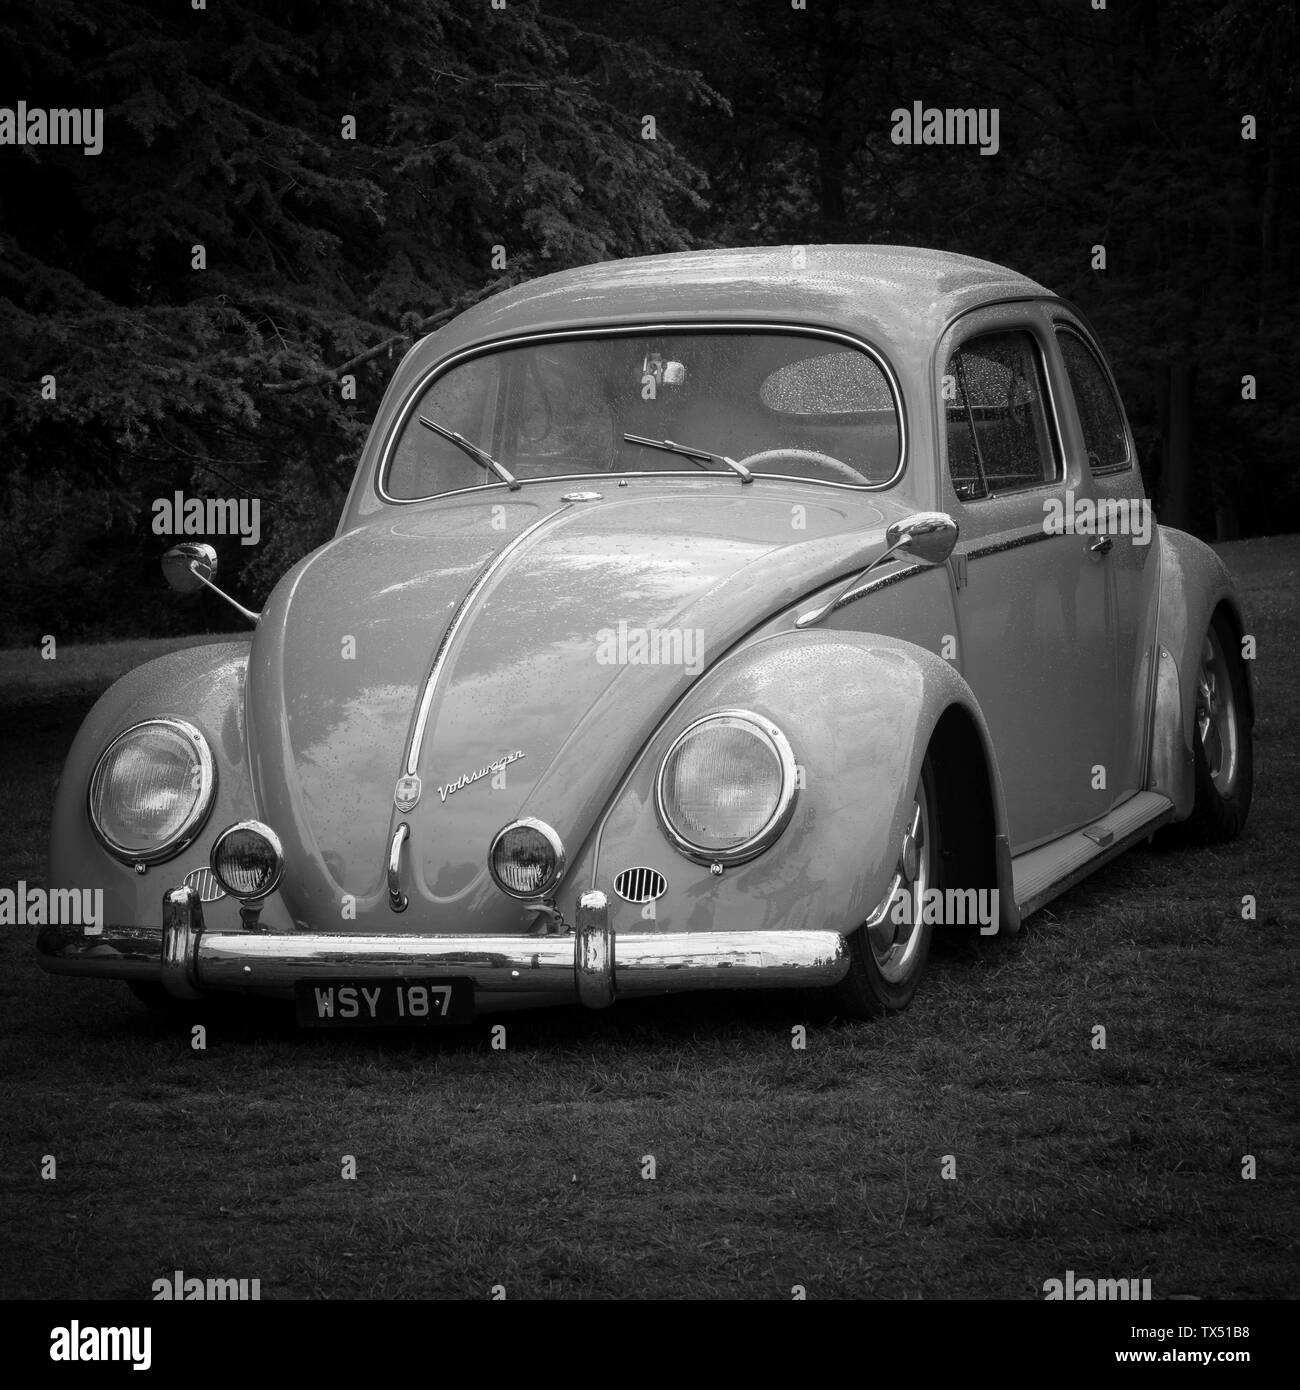 A classic Volkswagen Beetle on display at Caffeine & Machine in Ettington, UK Stock Photo